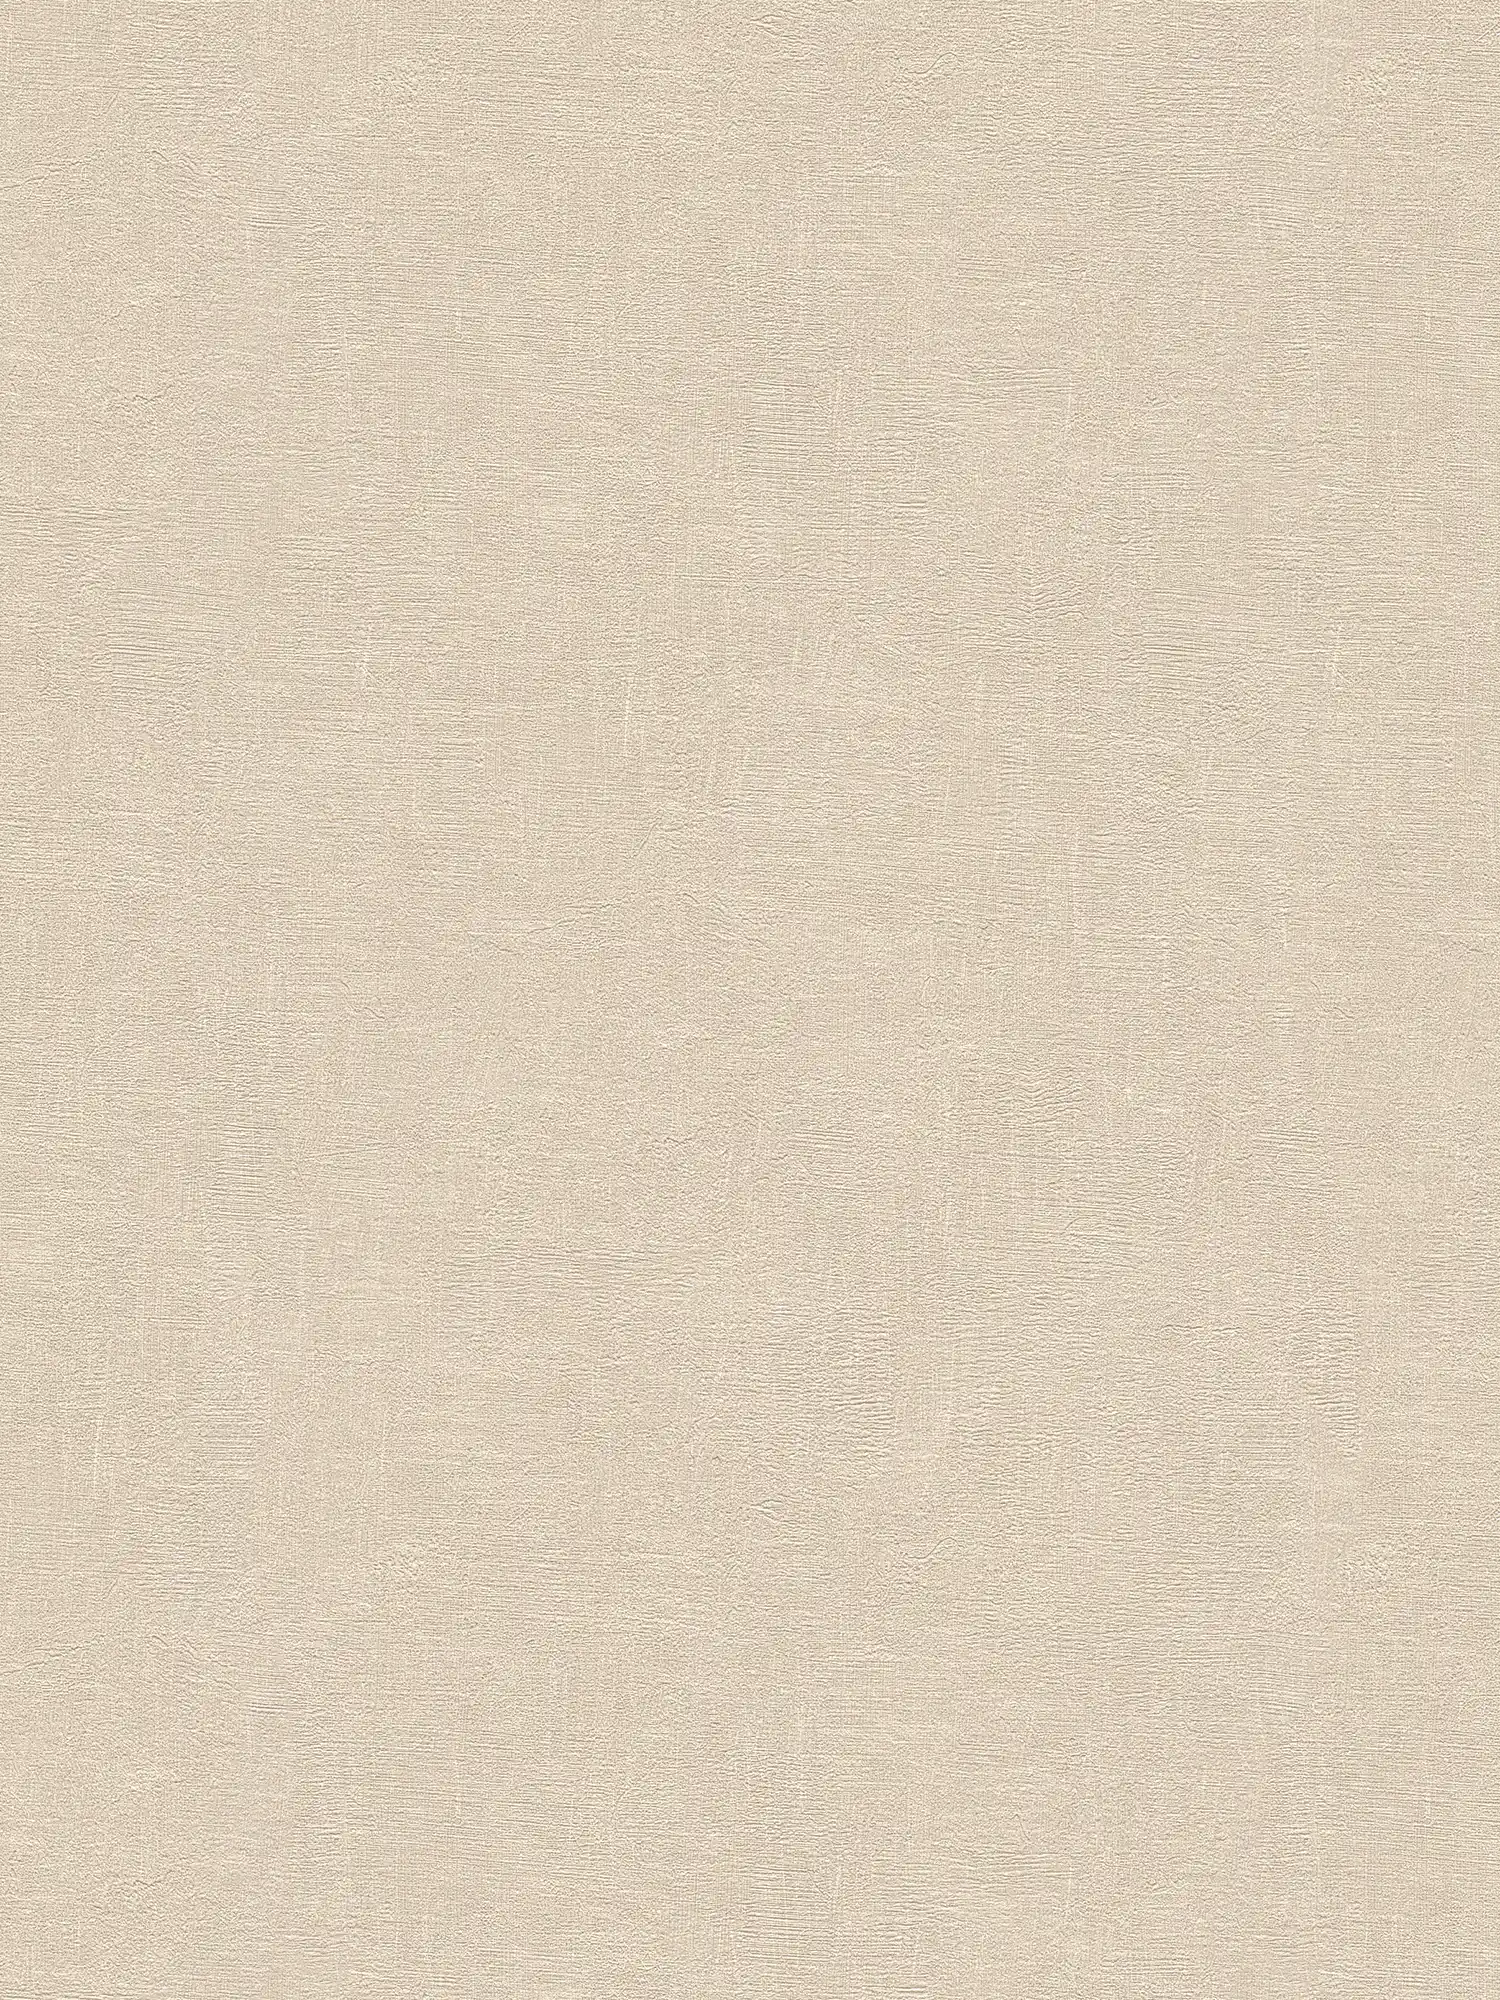 Rustic plaster look wallpaper with texture pattern - beige
